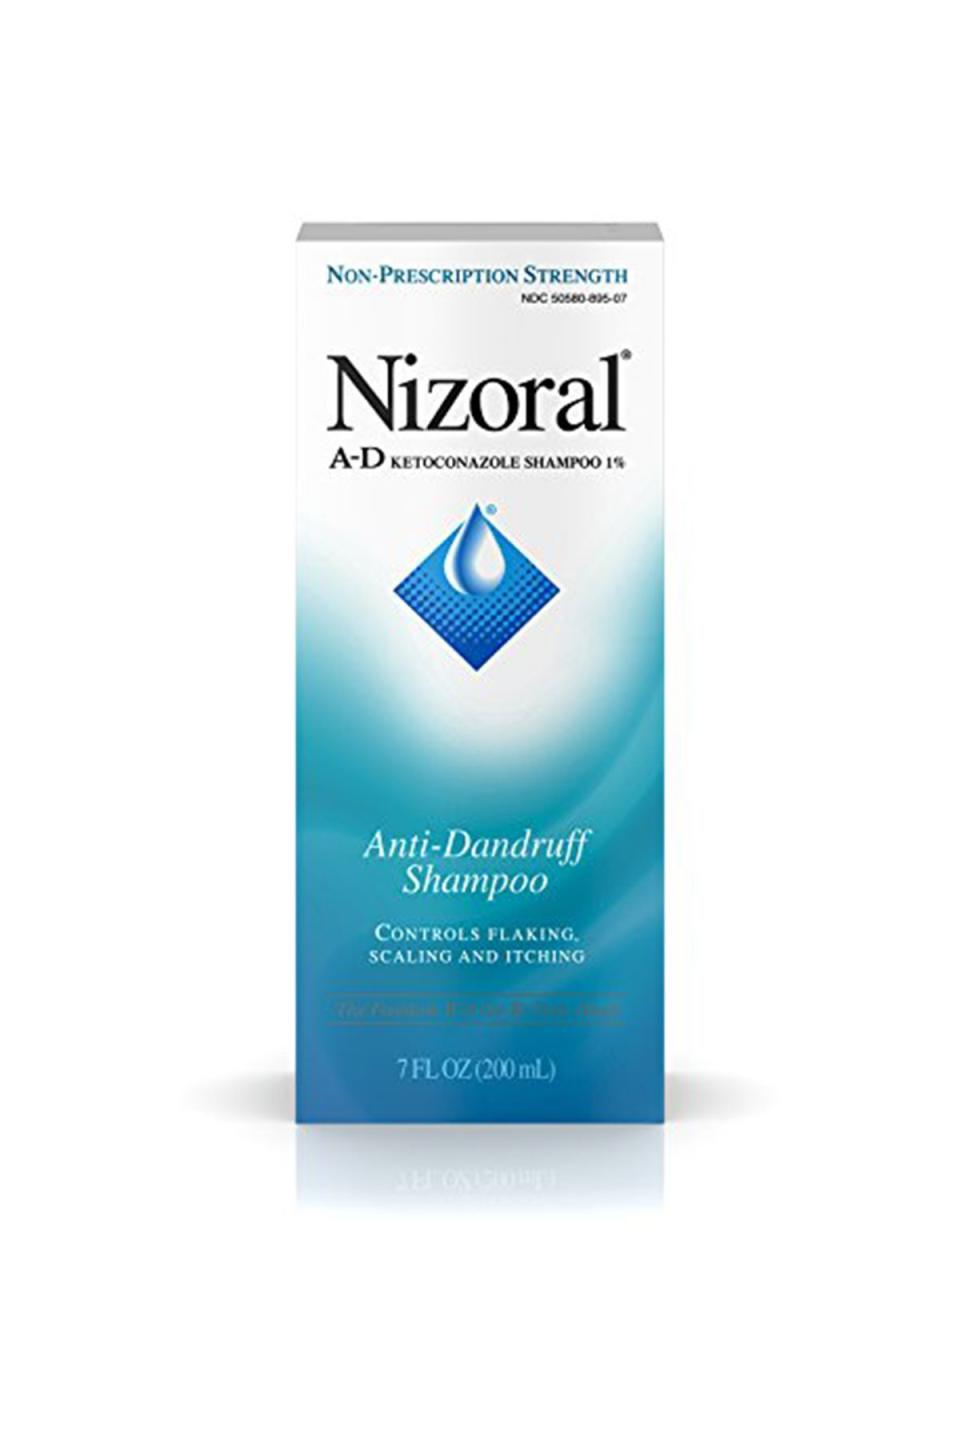 3) A-D Anti-Dandruff Shampoo with Ketoconazole 1%